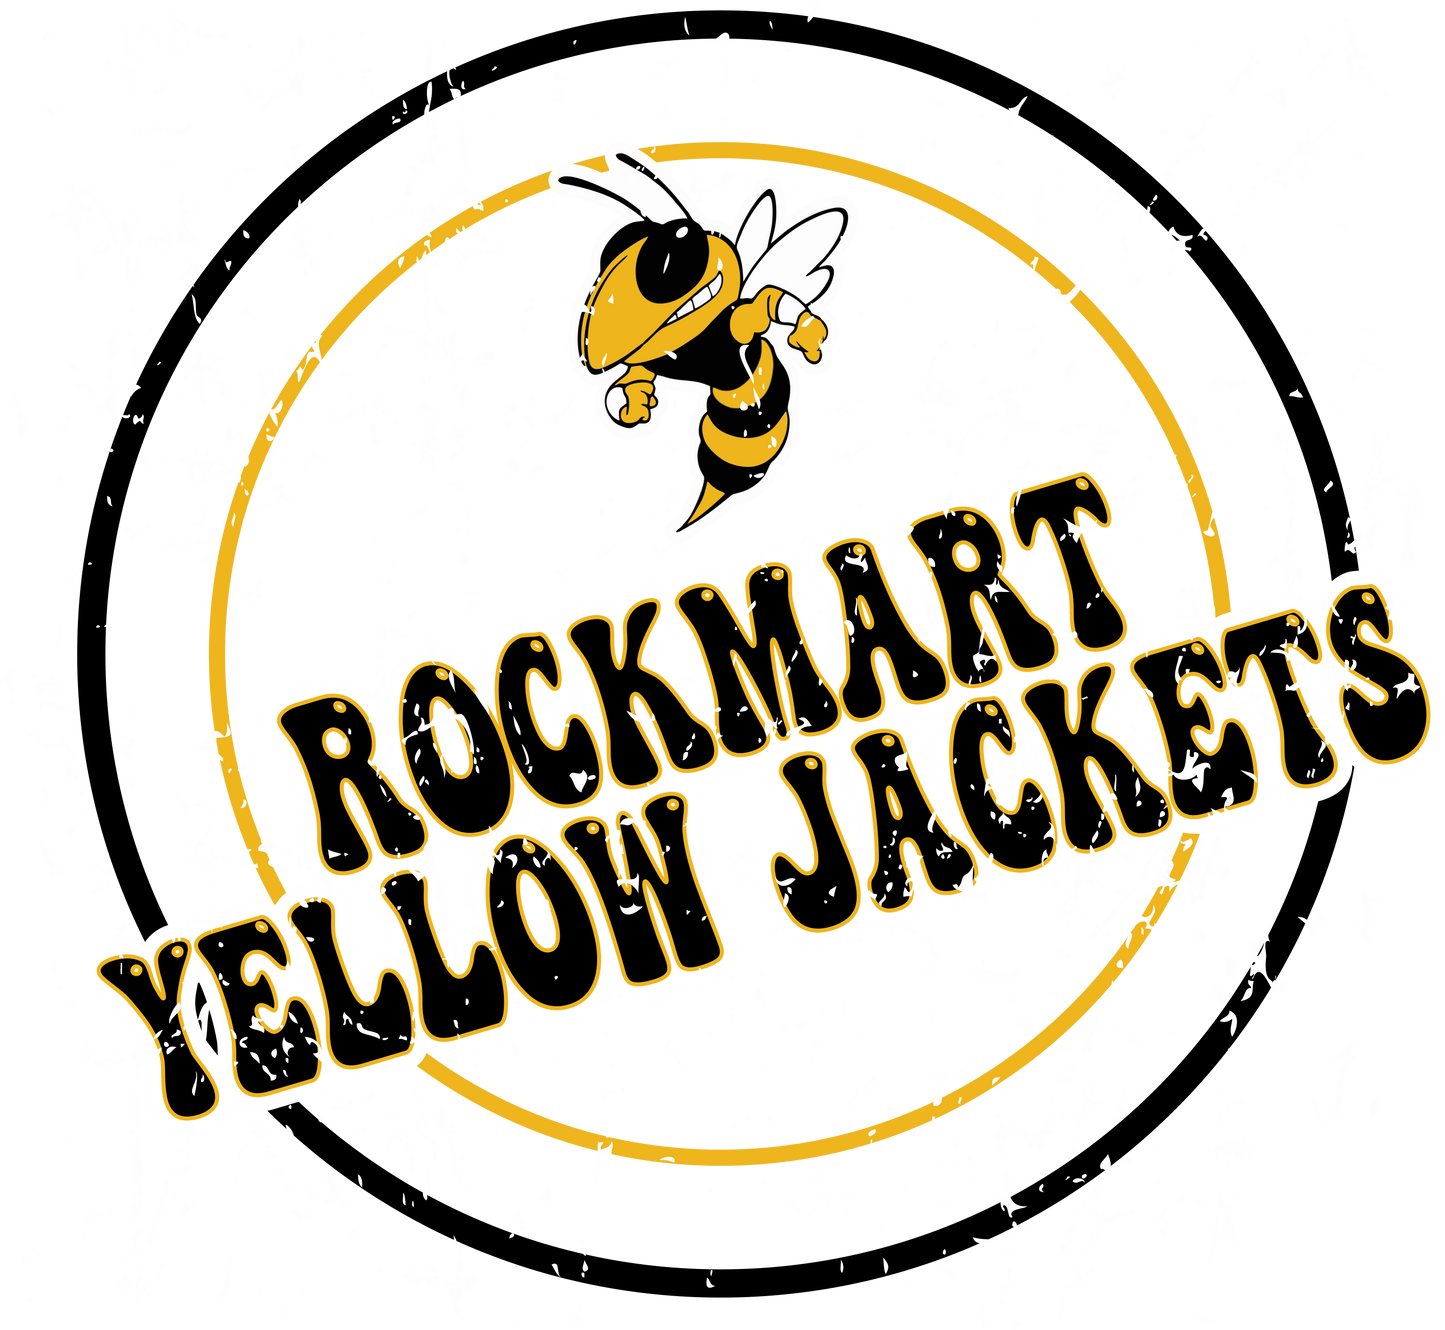 Rockmart Yellow Jackets Circle Design Transfer